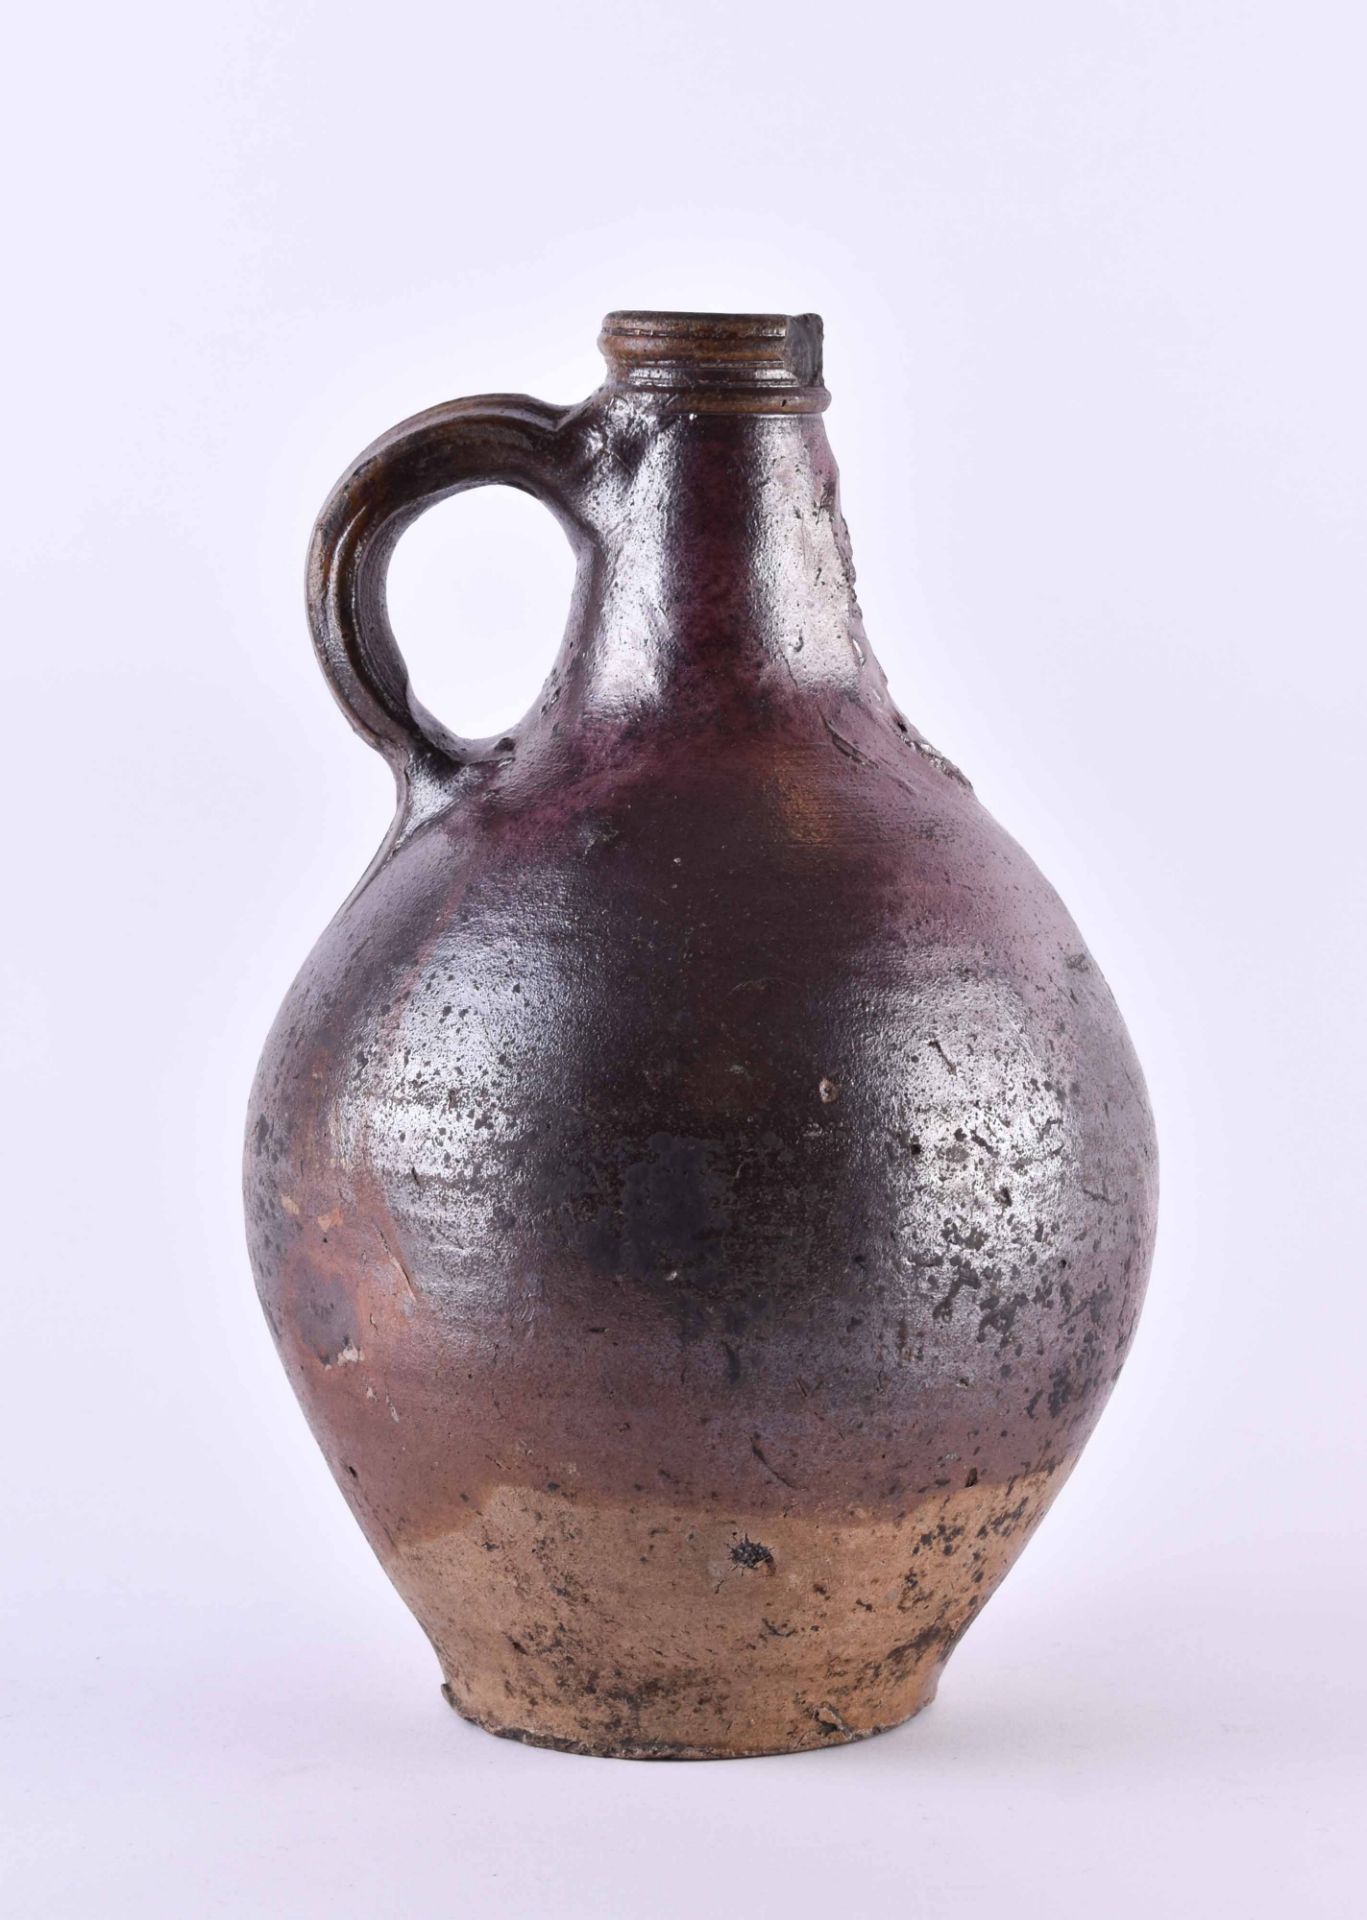 Bartmann jug 18th century - Image 2 of 5